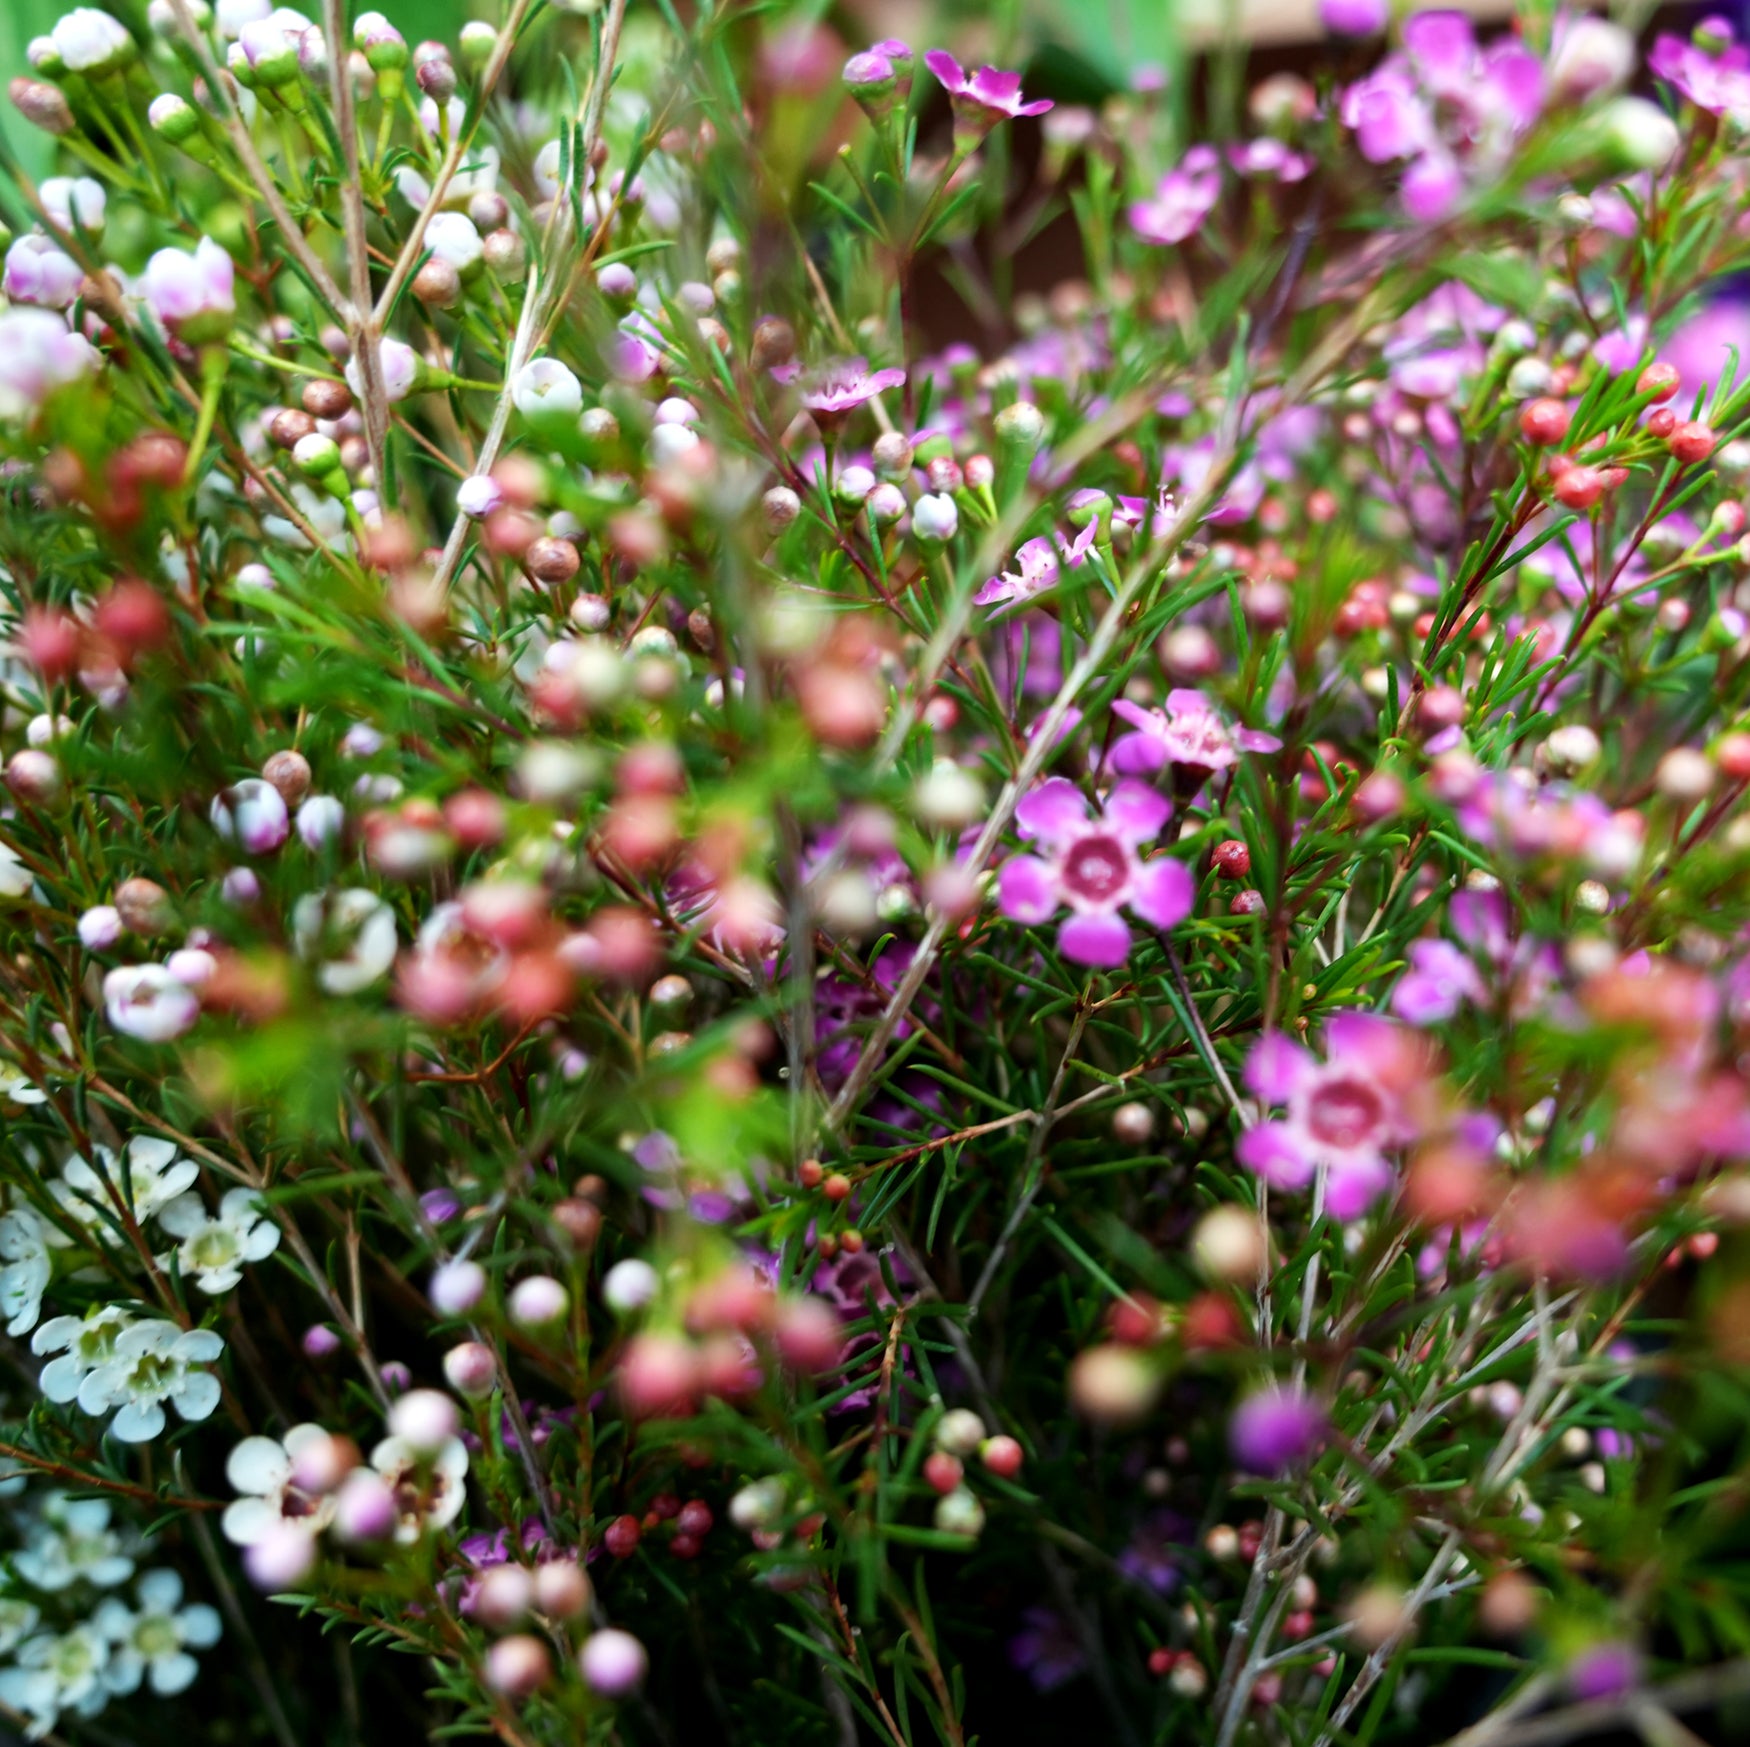 pemberton valley nurseries, pemberton flowers, pemberton plants, pemberton trees